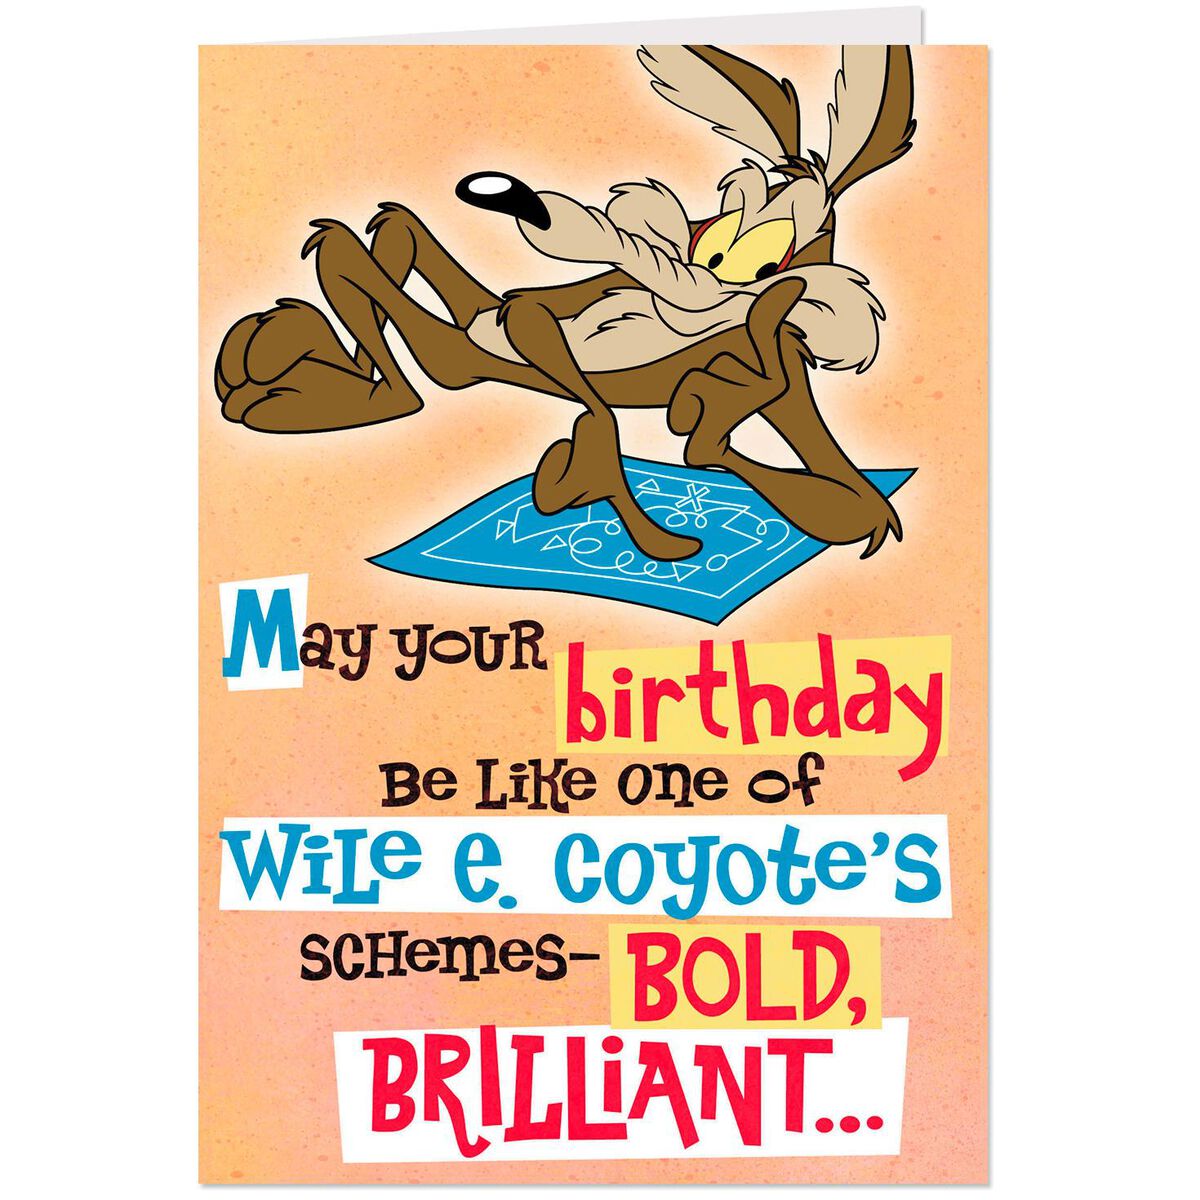 Wile E. Coyote Bold and Brilliant Birthday Card - Greeting Cards - Hallmark